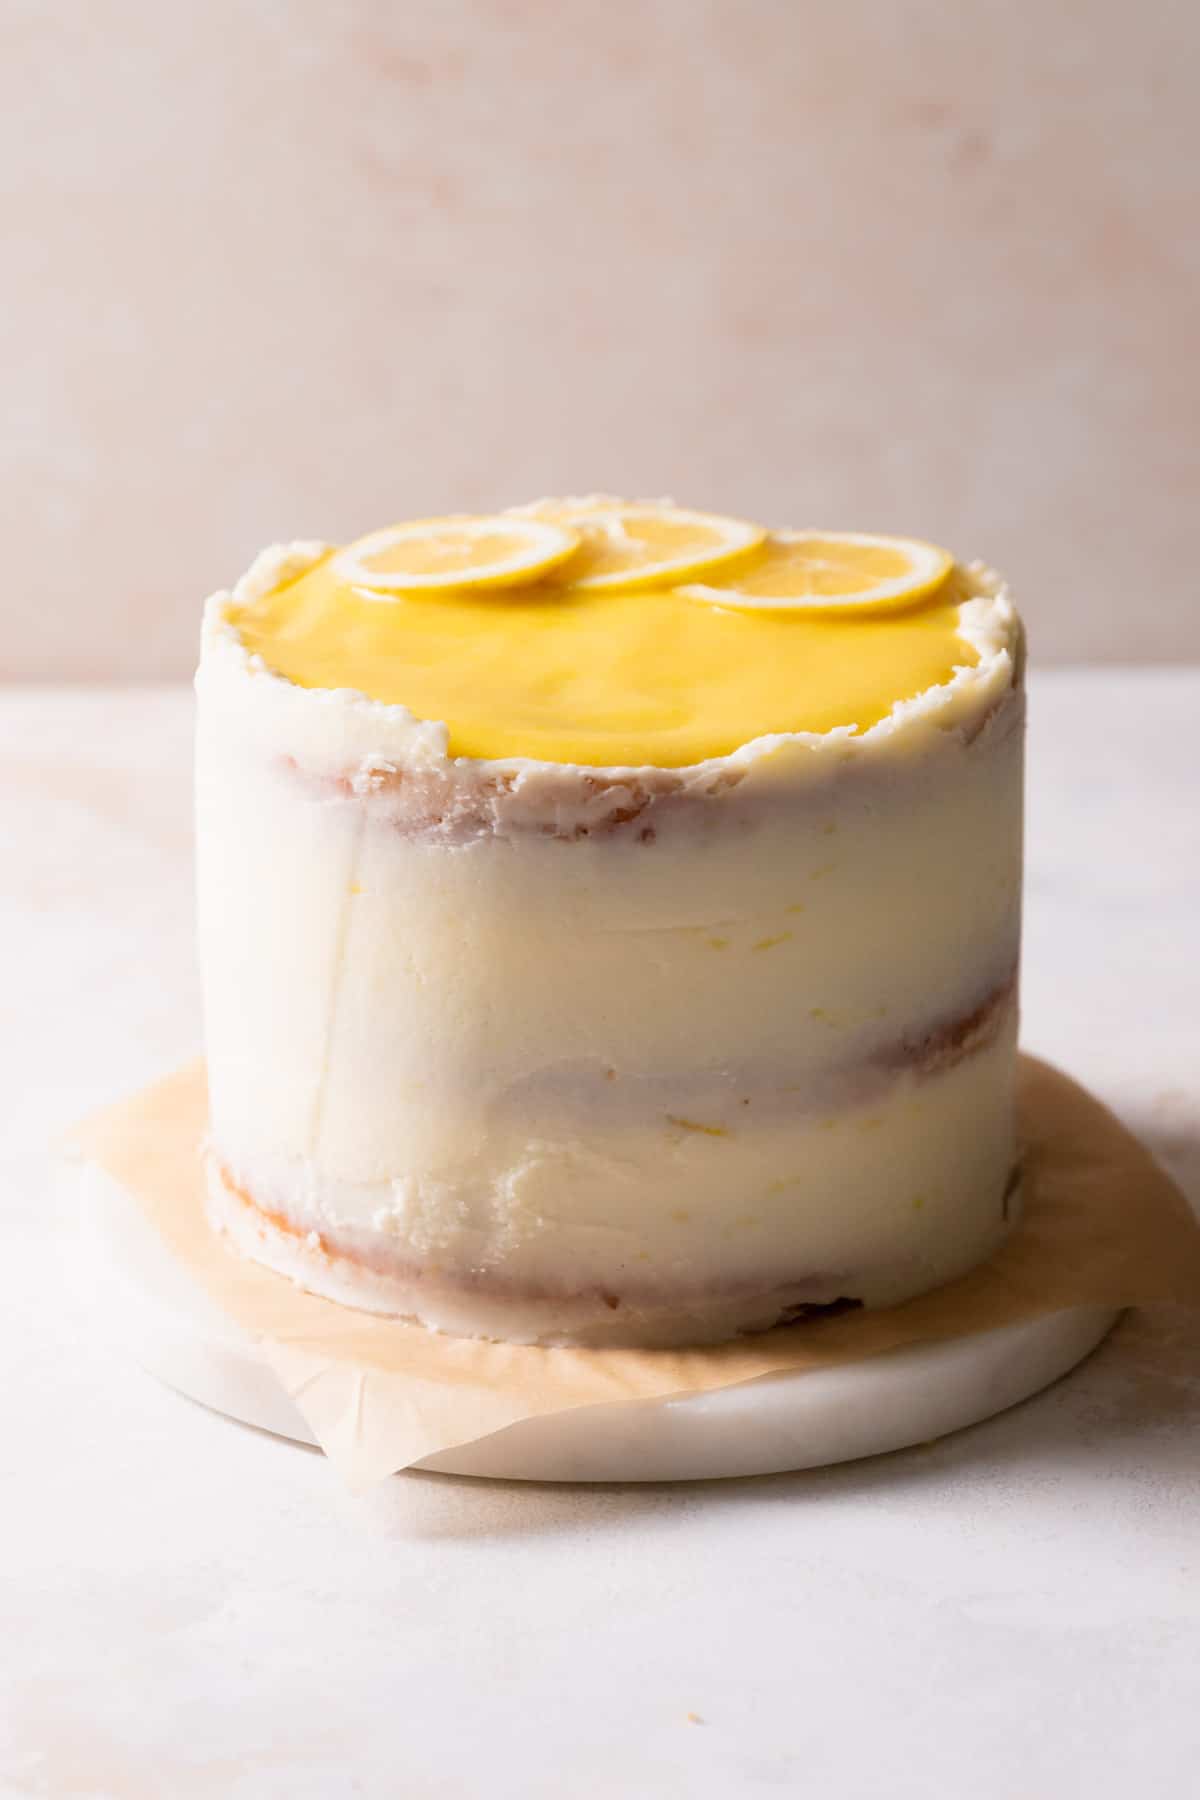 the decorated lemon bar cake on a white marble slab.